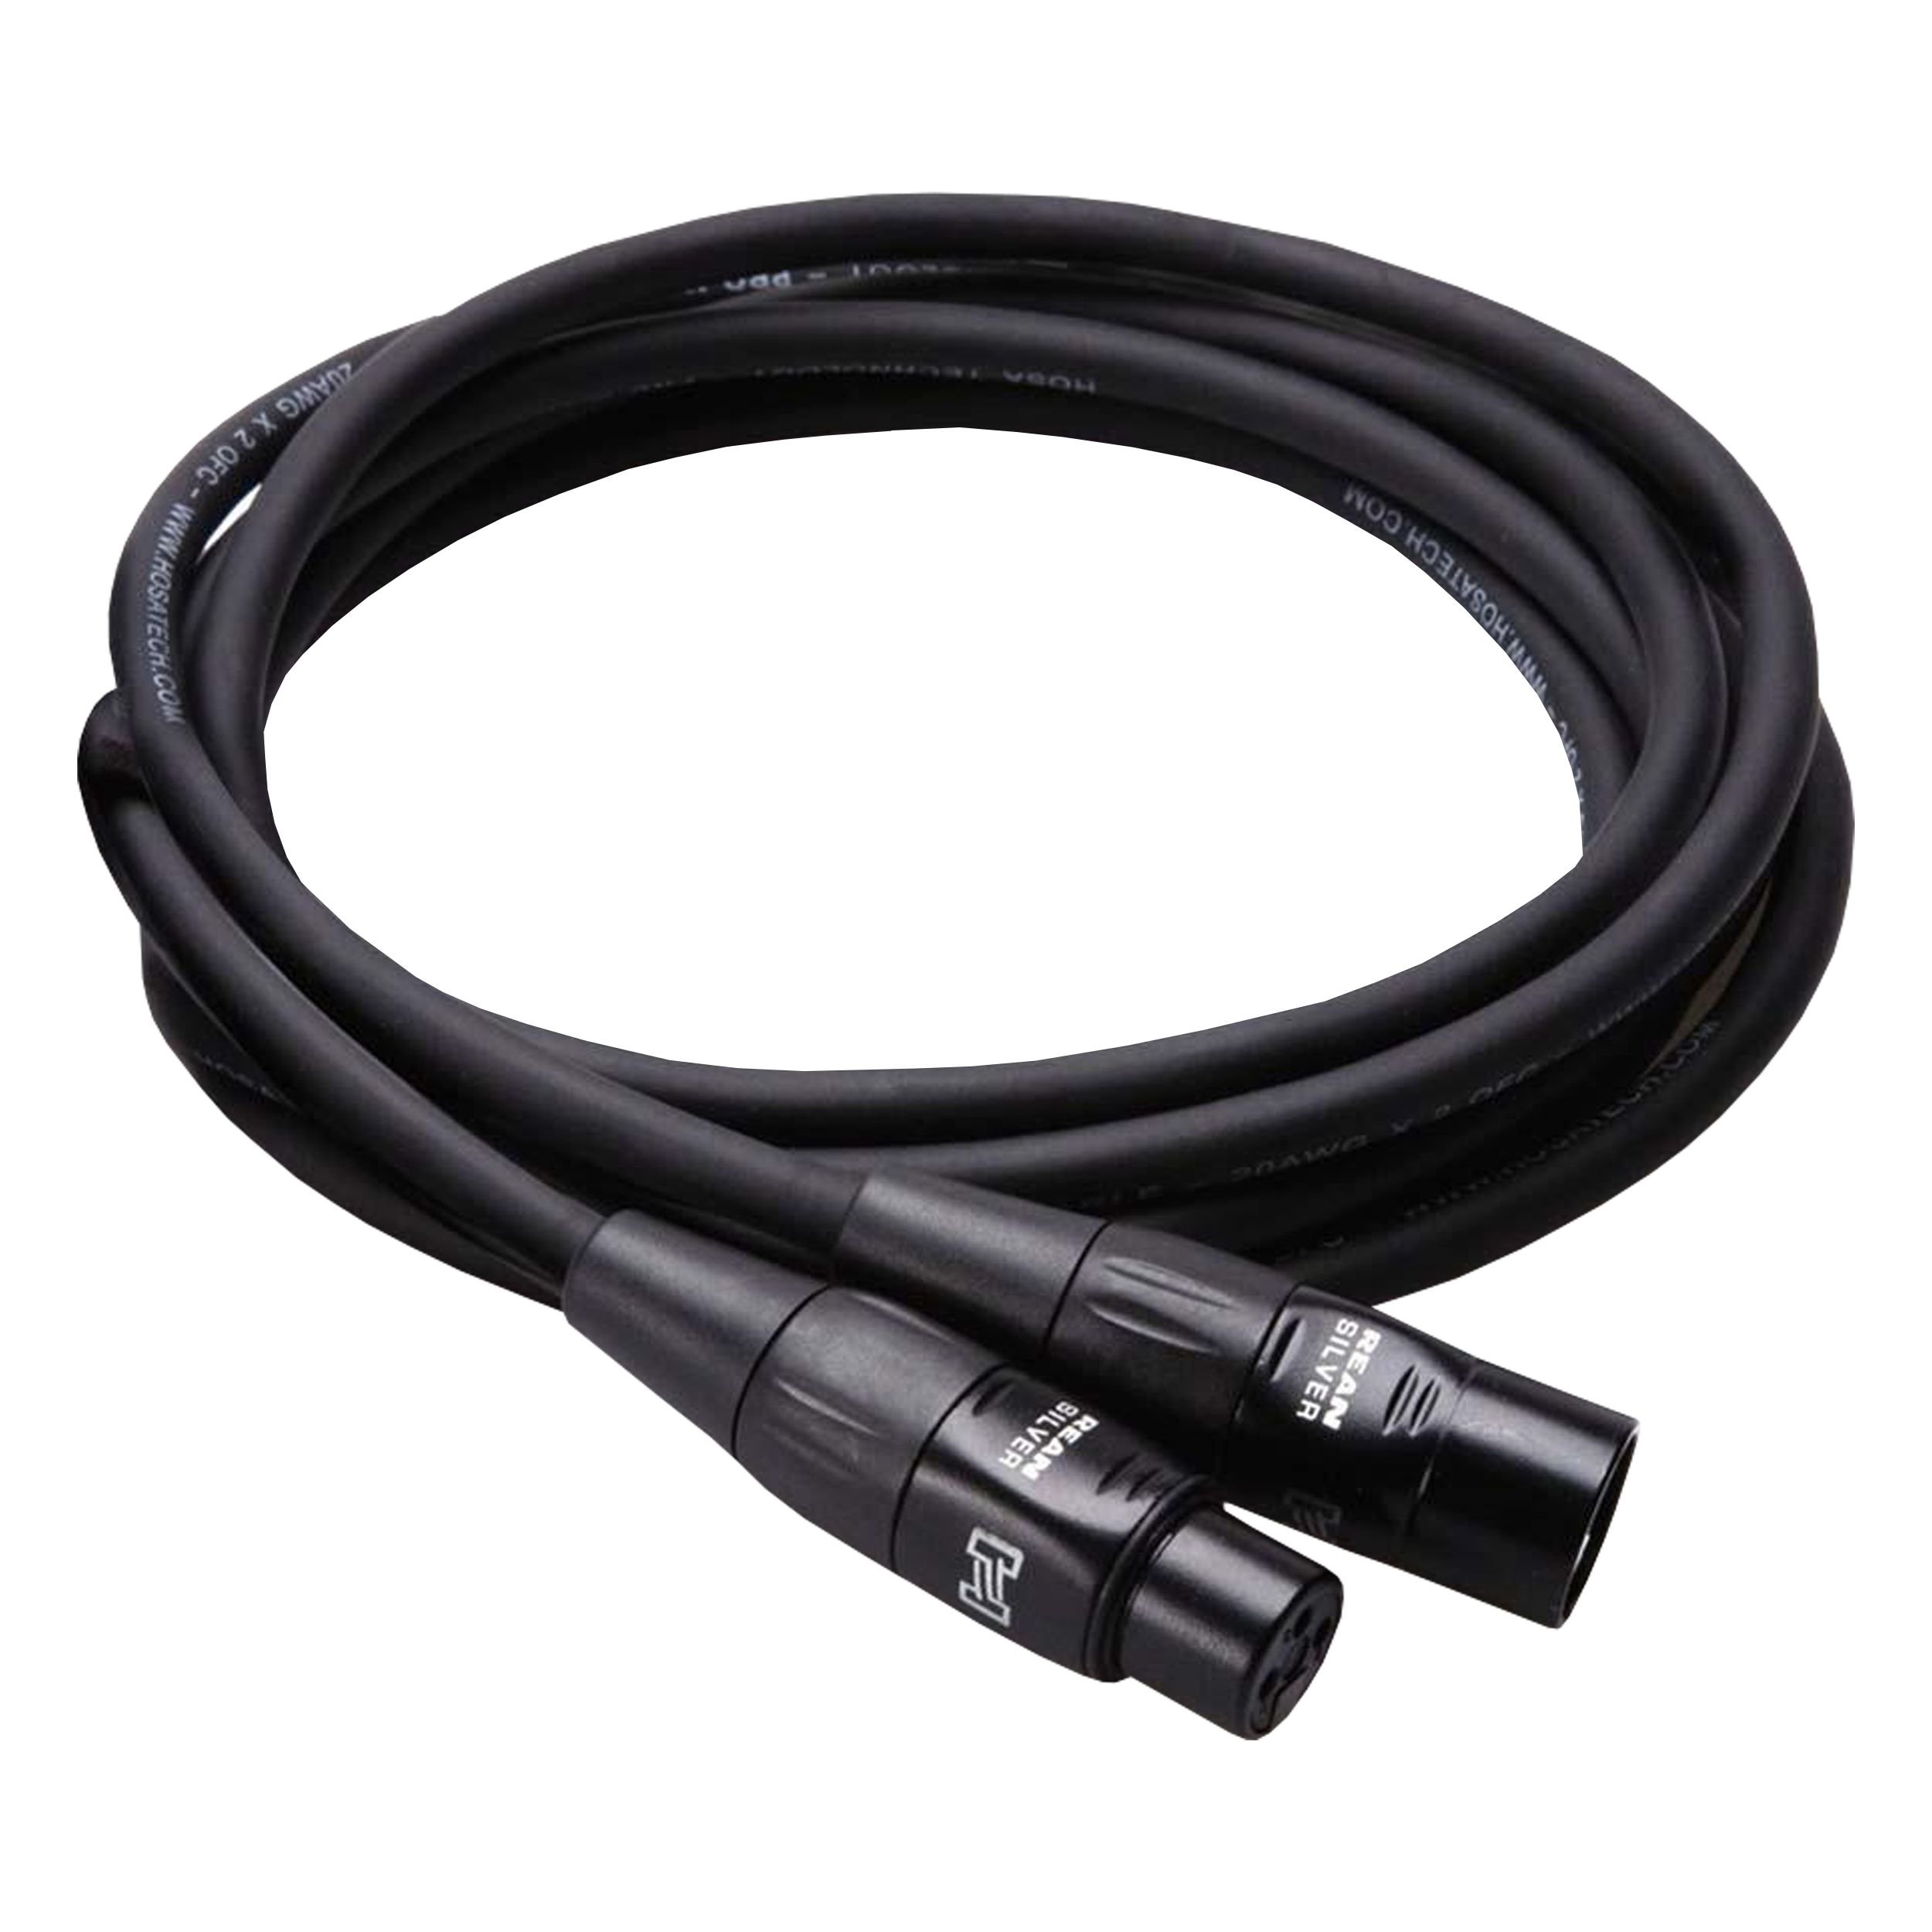 hosa-hmic-003-pro-microphone-cable-rean-xlr-female-to-xlr-male-3ft.jpg